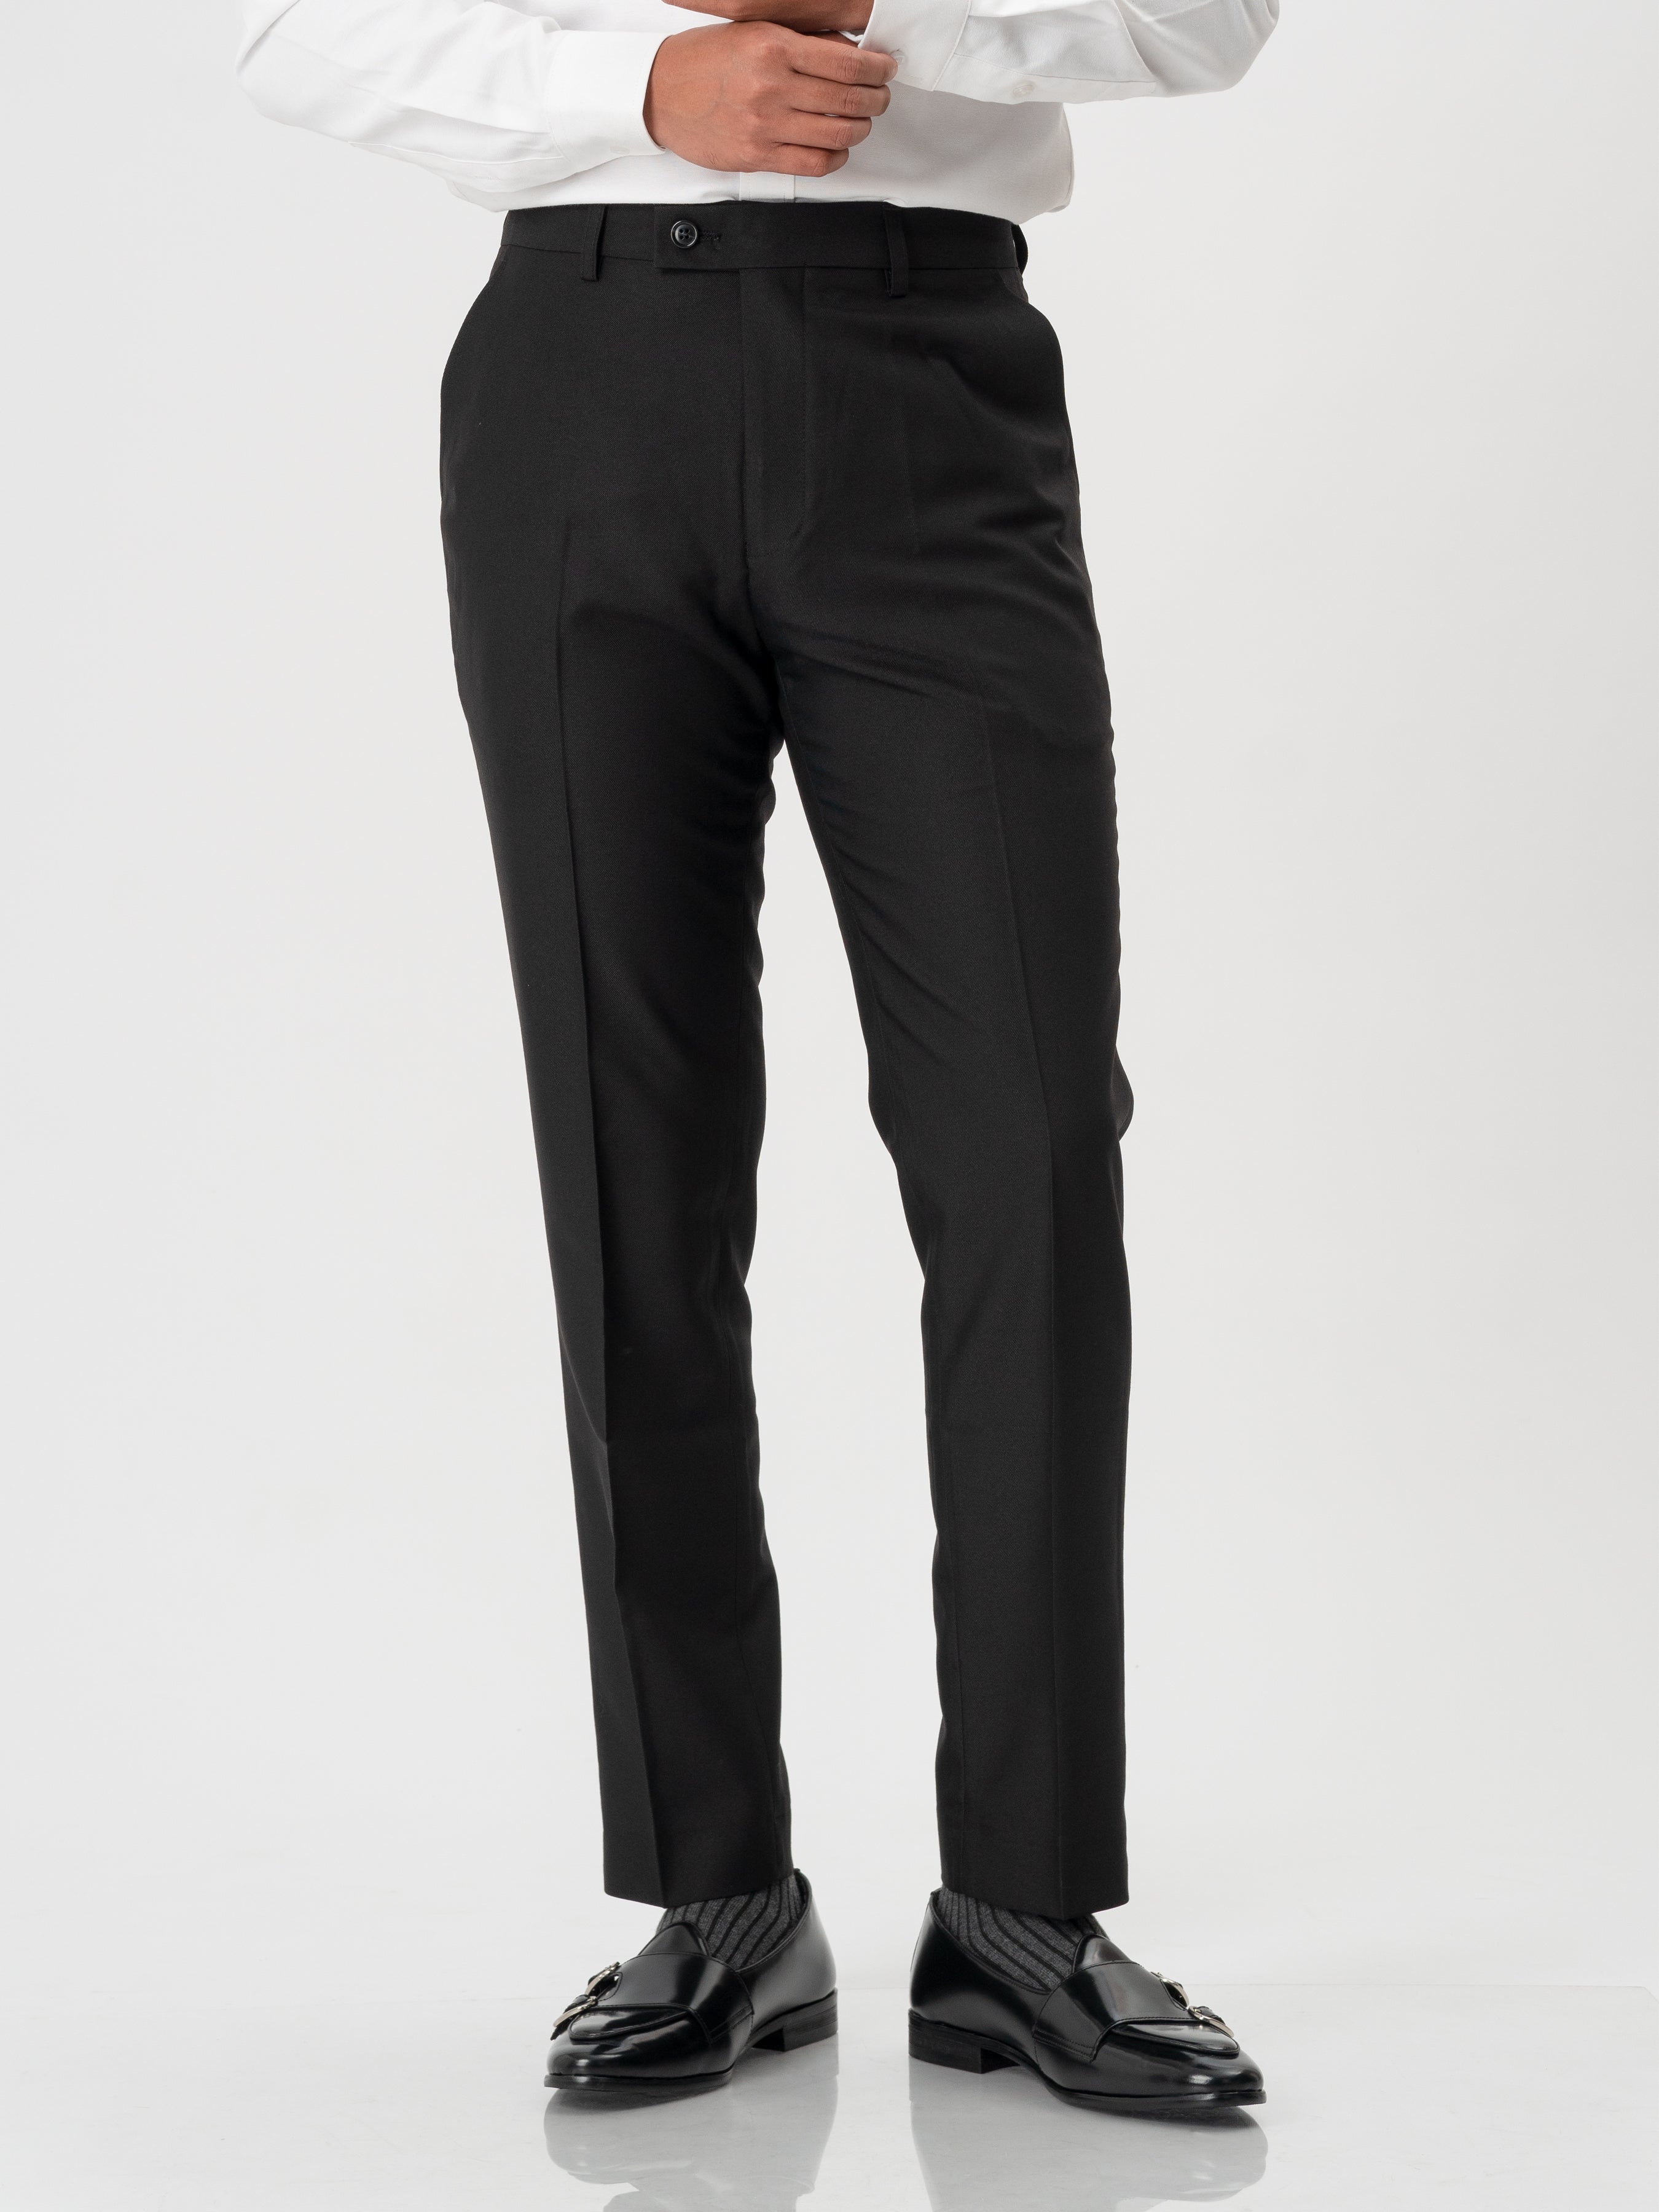 Trousers With Belt Loop - Tuxedo Black Plain (Stretchable) | Zeve Shoes